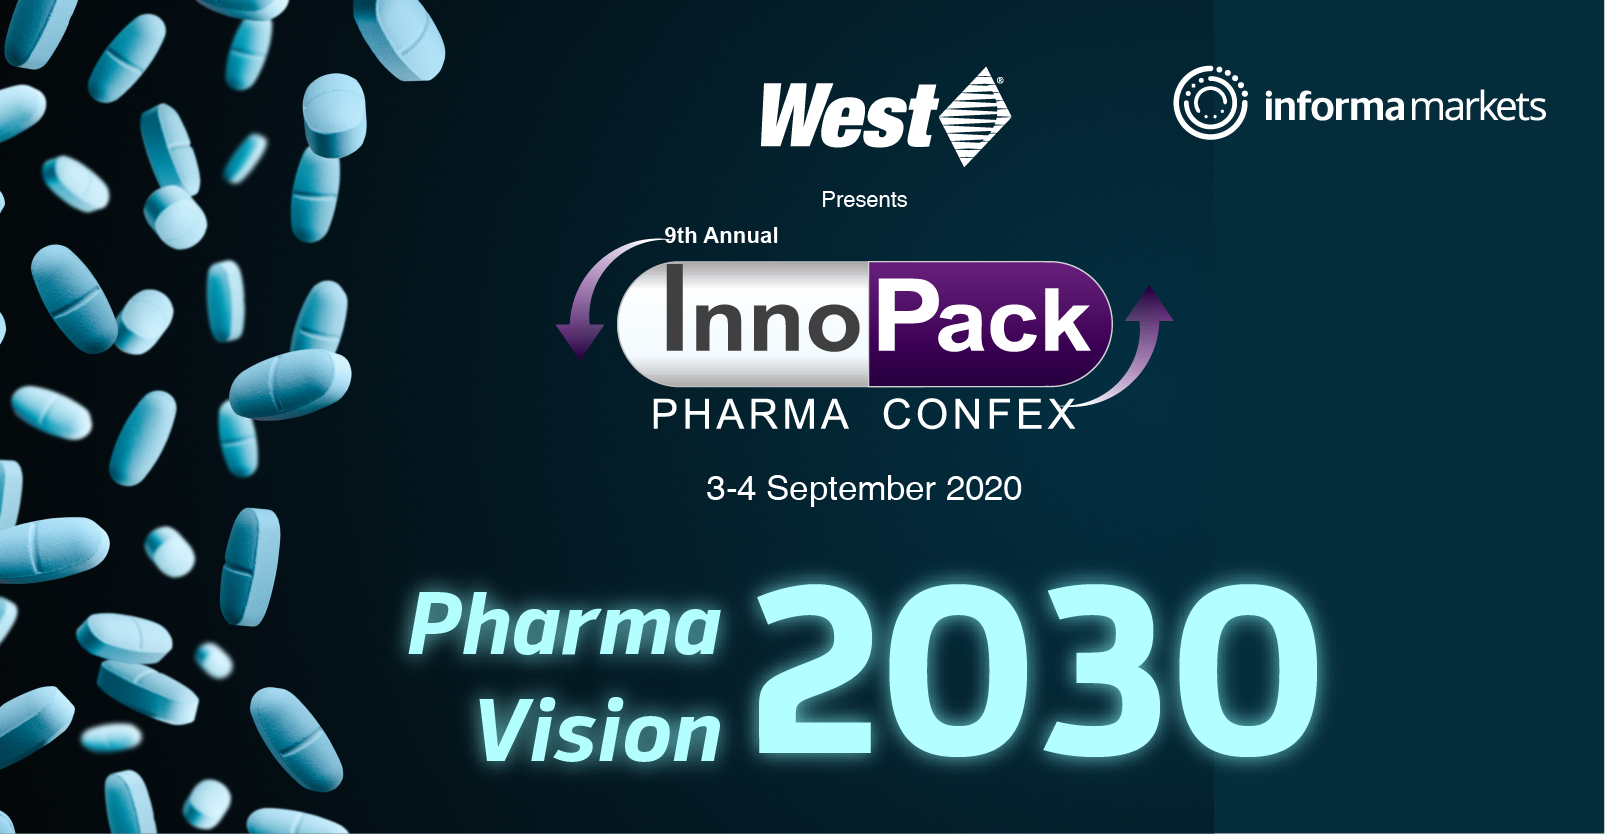 Pharma 2030 and Packaging